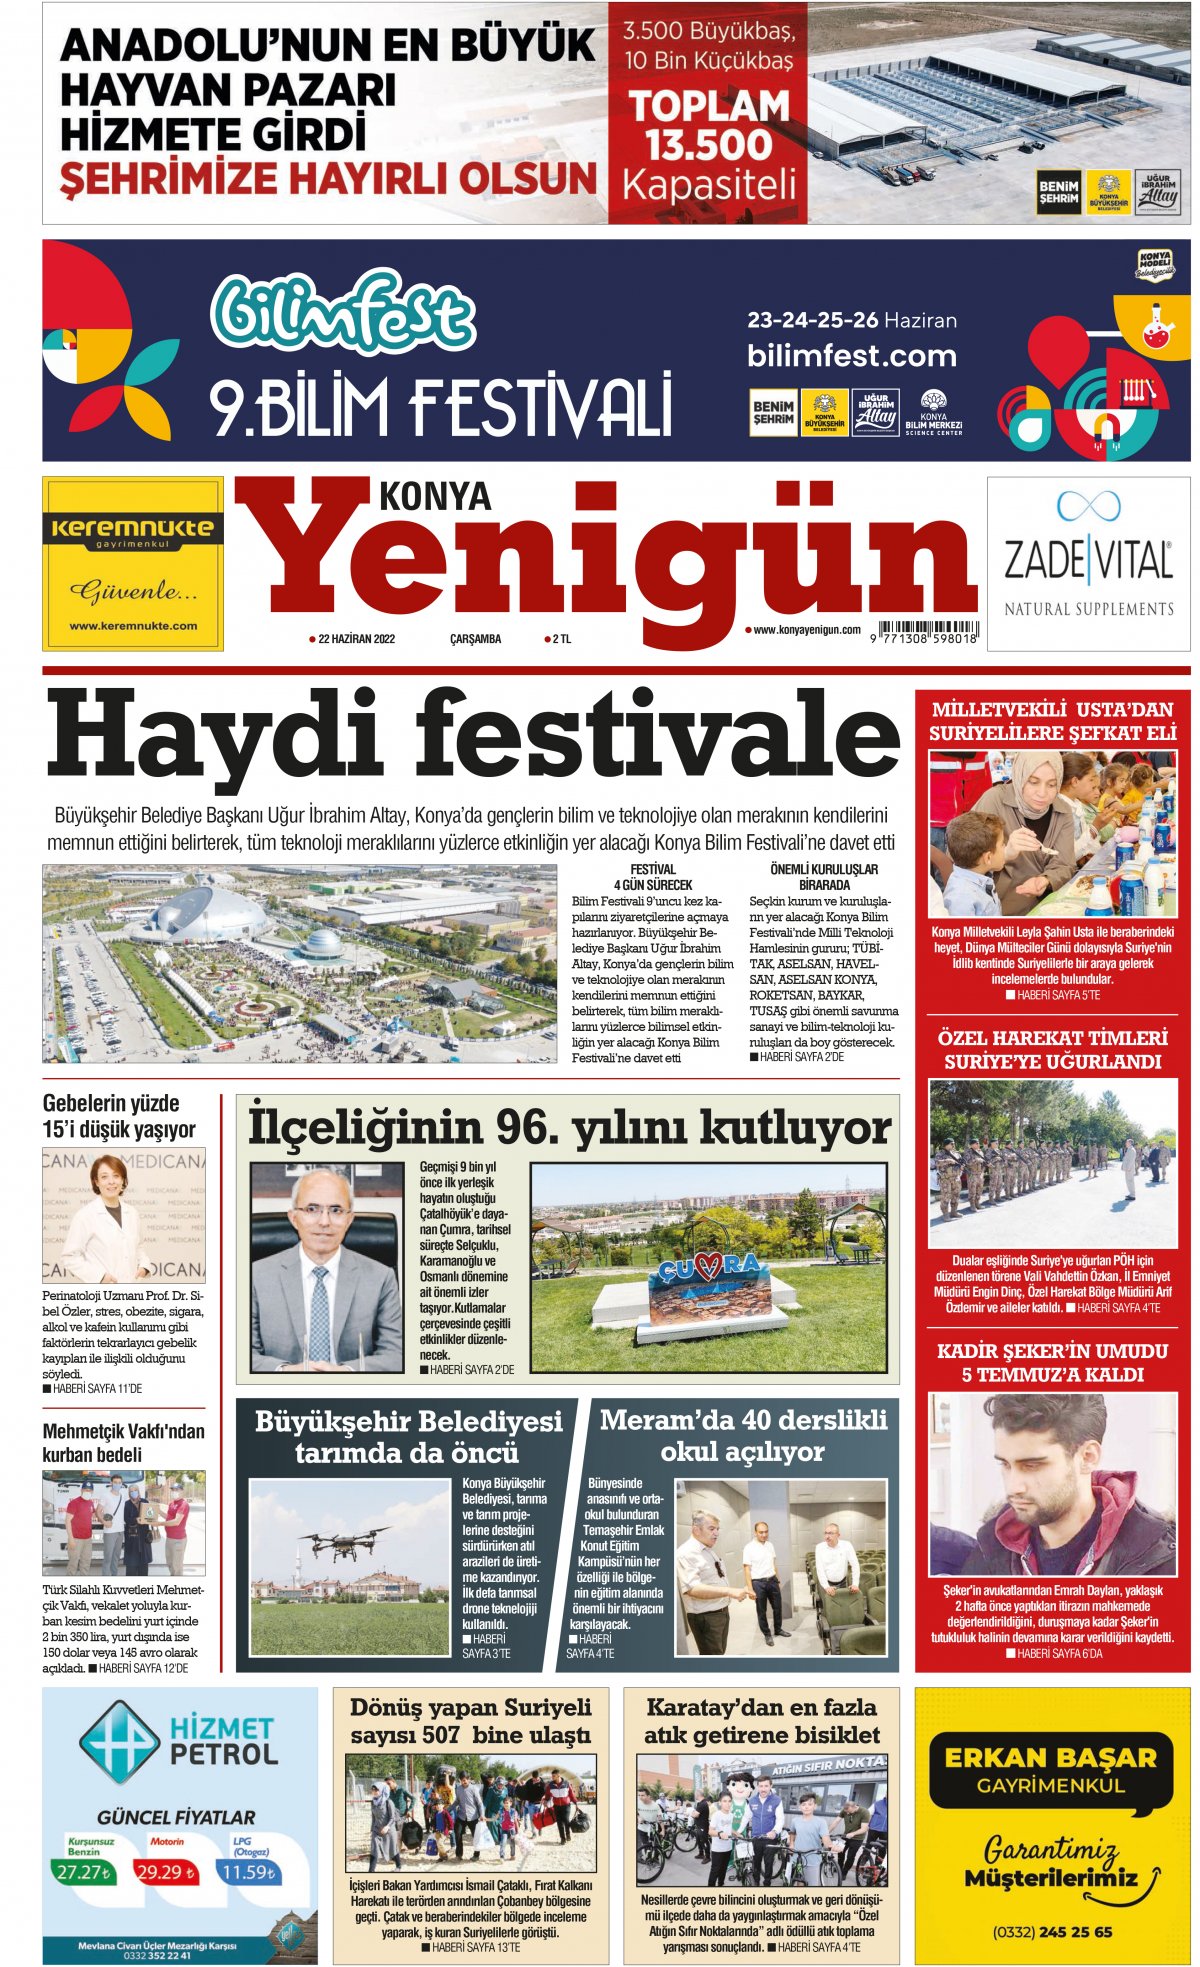 Konya Yenigün Gazetesi - 22.06.2022 Manşeti